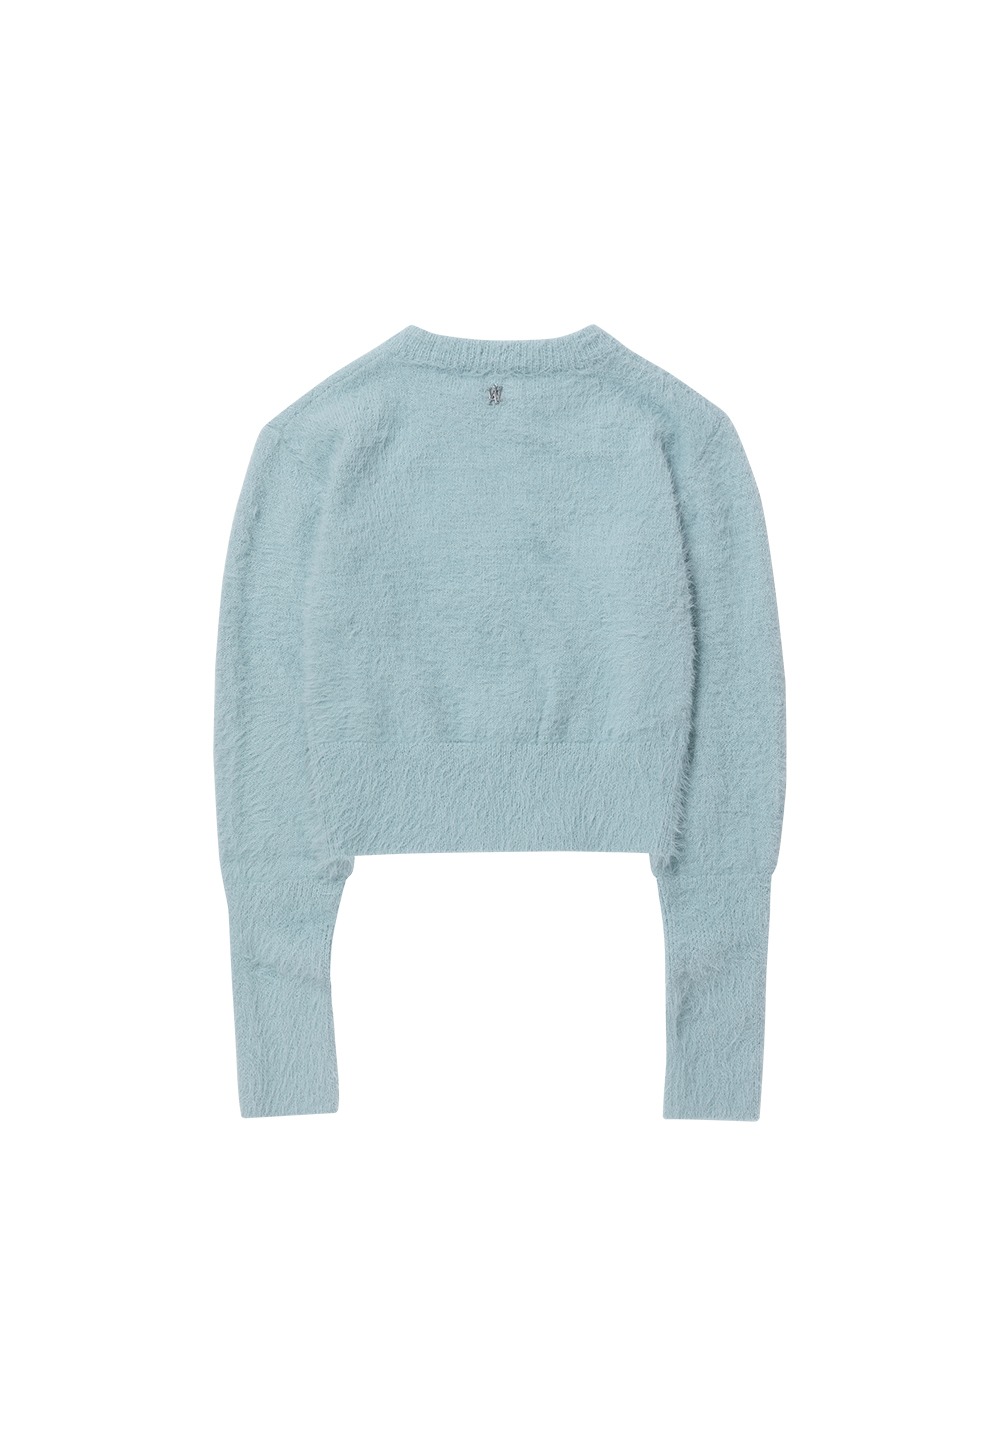 Hairy knit zip-up cardigan - SKY BLUE